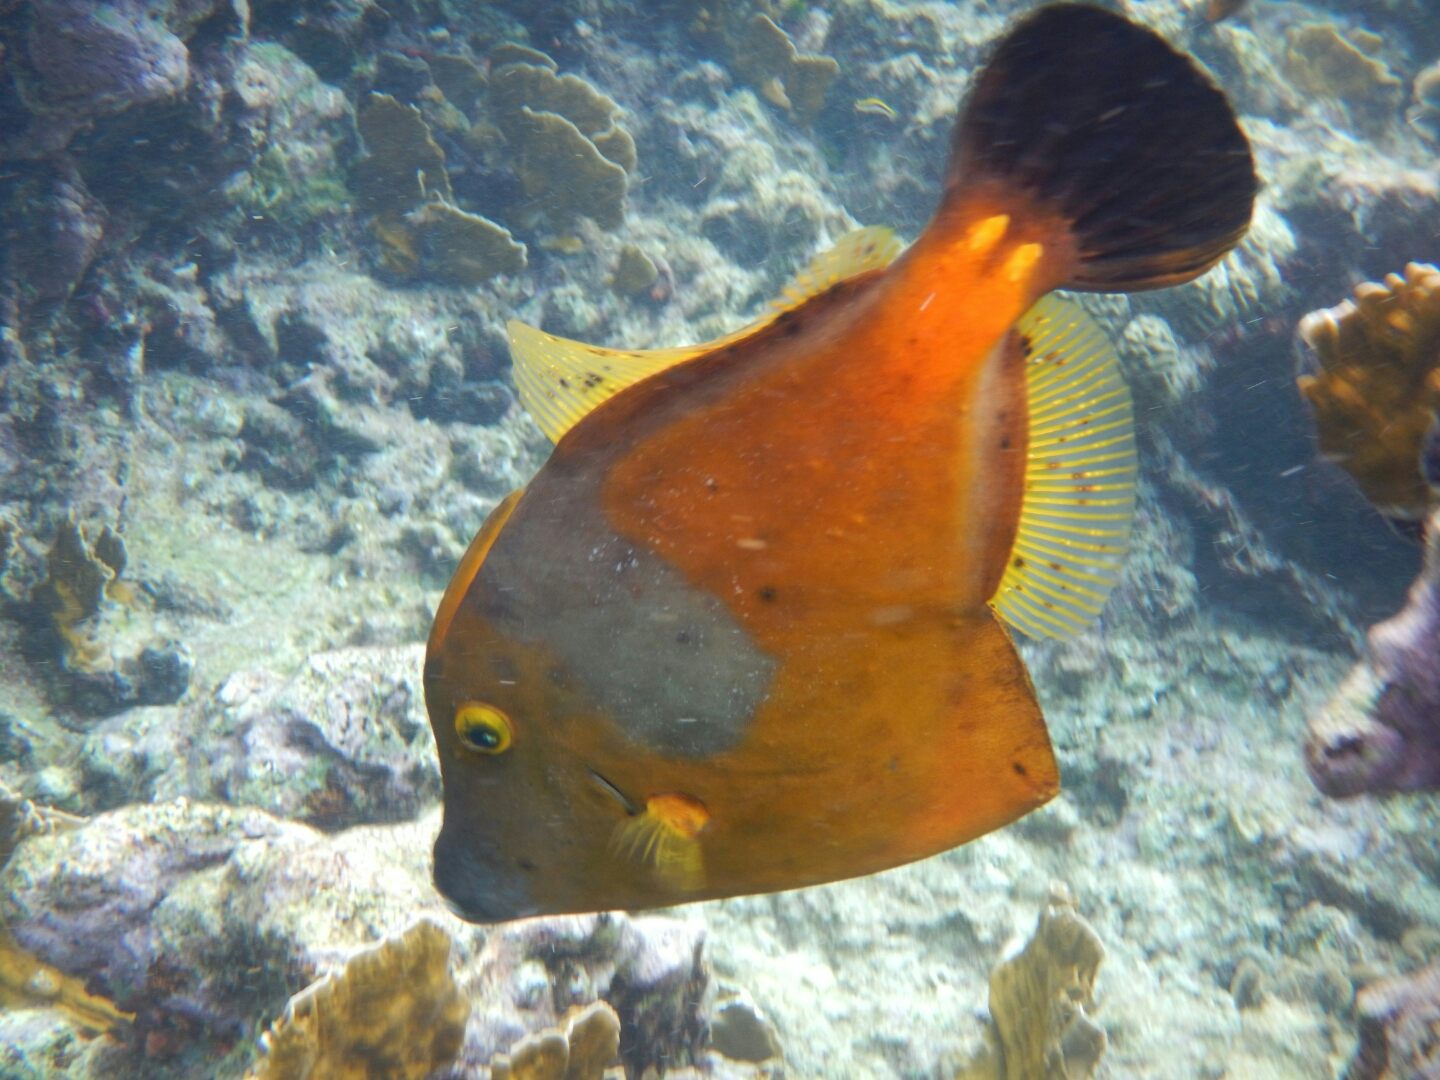 Klein Bonaire, Bonaire snorkeling